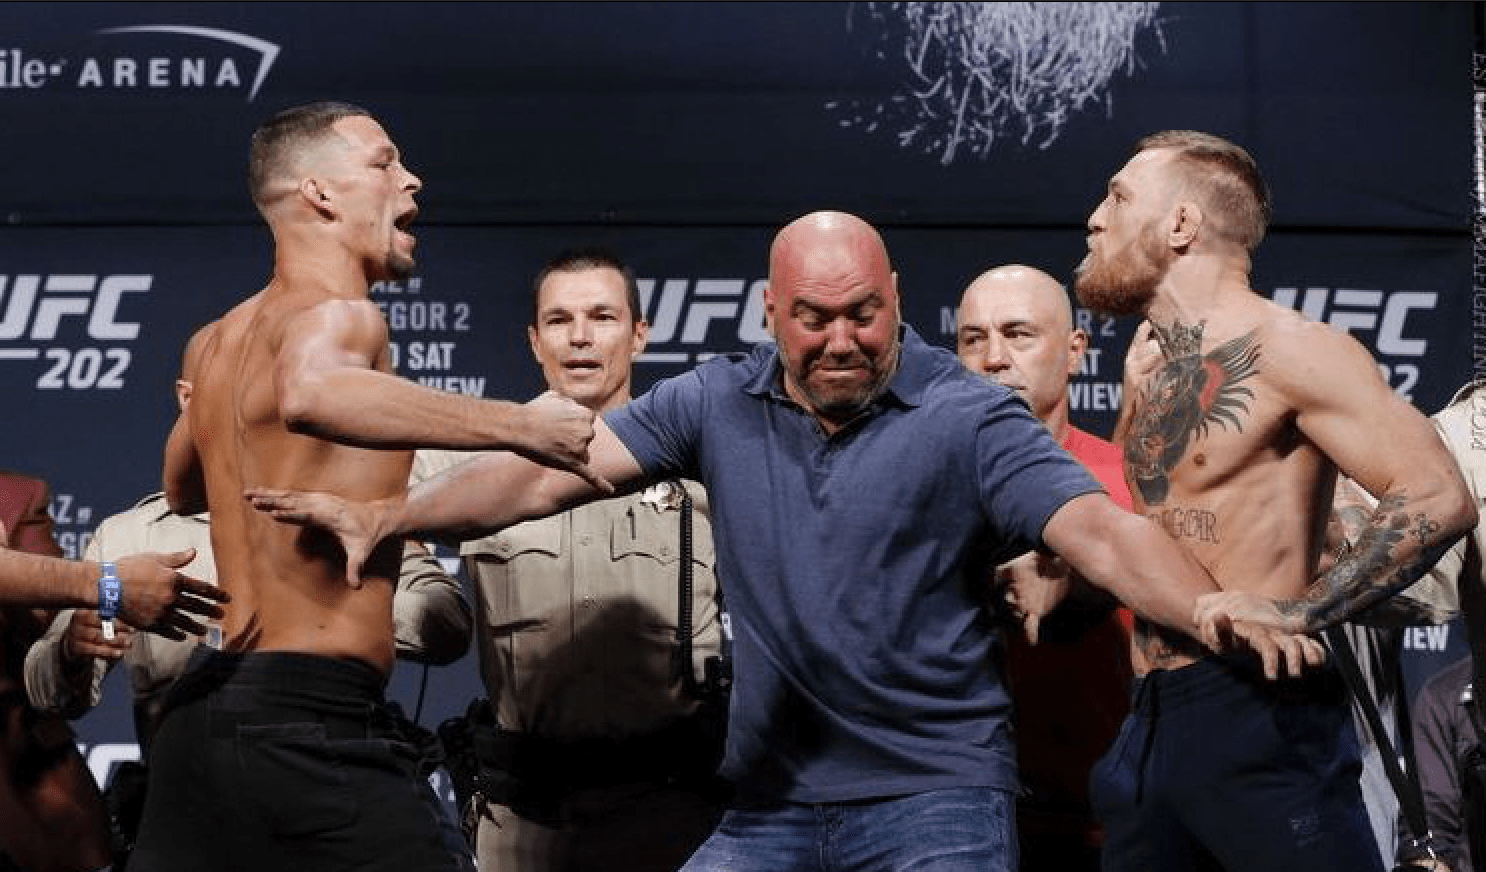 UFC: Conor McGregor And Nate Diaz Continue To Trade Blows